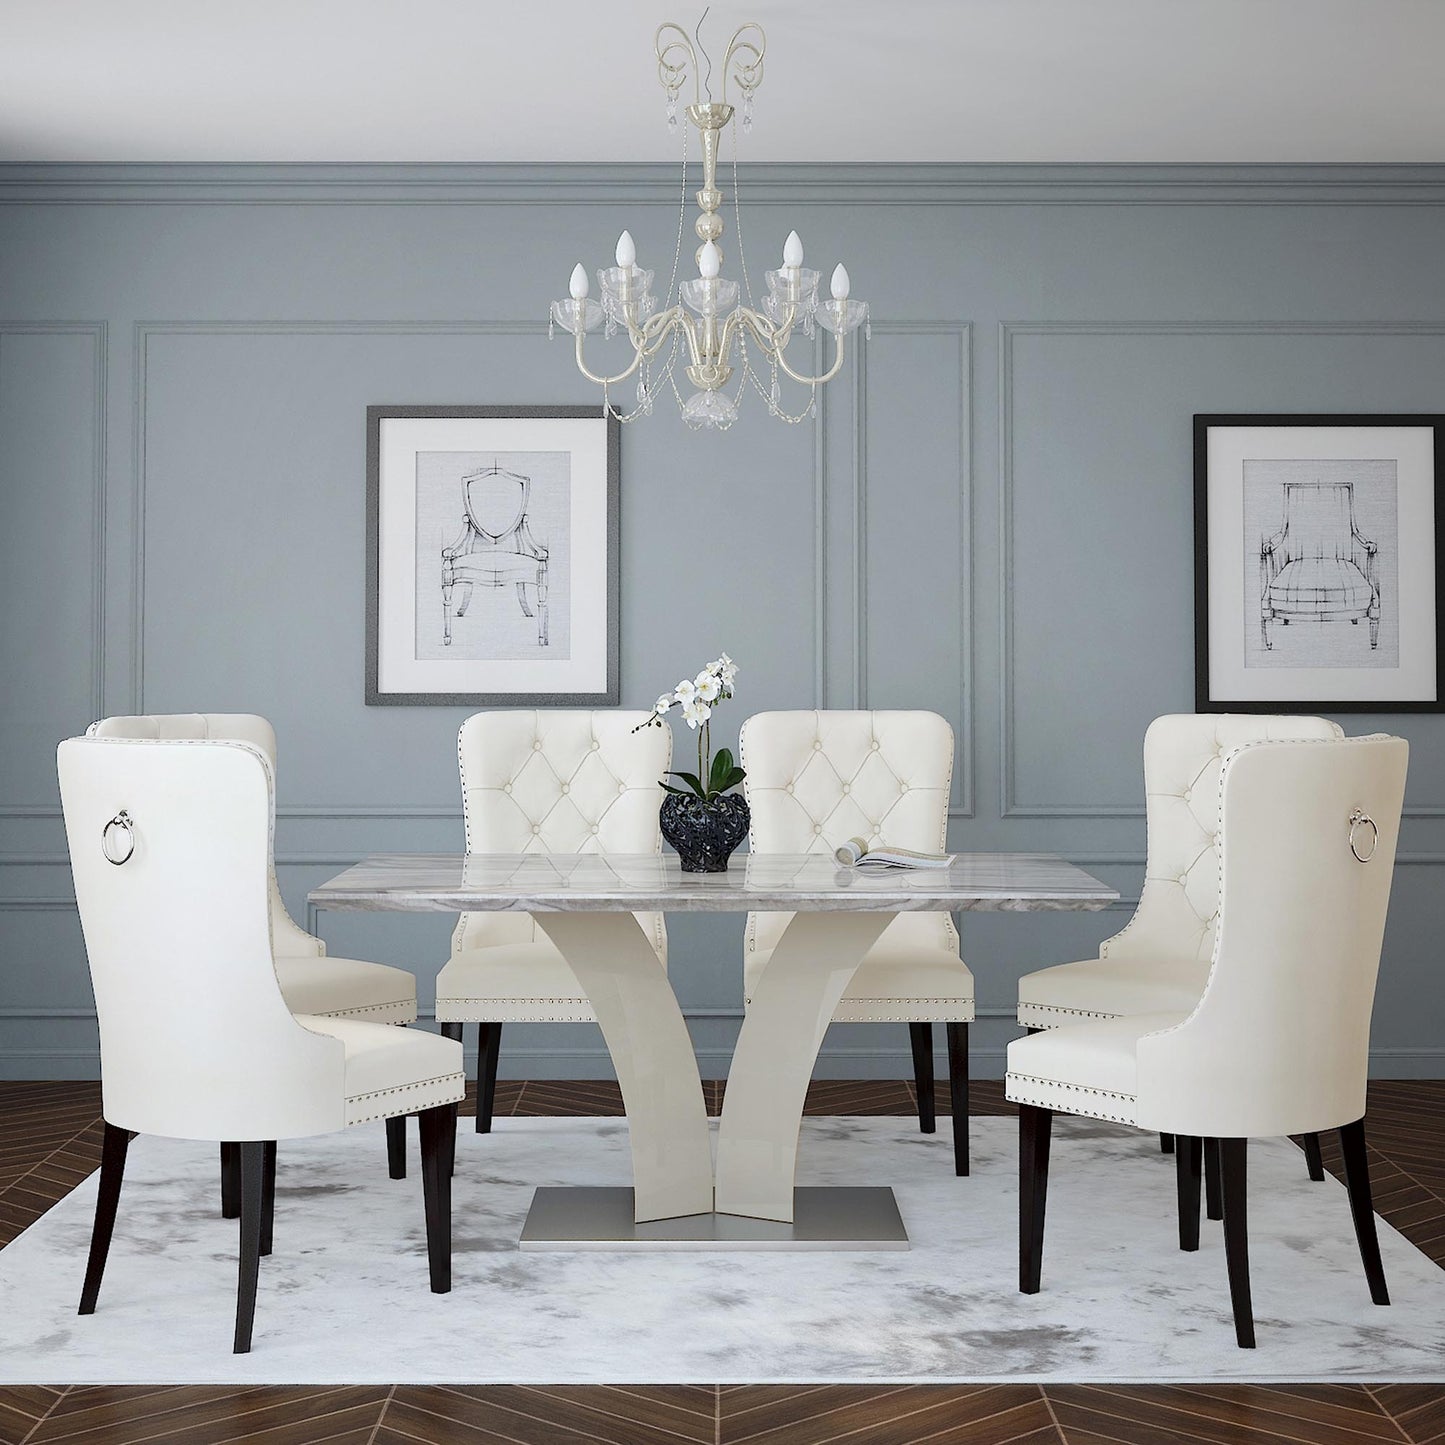 Napoli Rectangular Dining Table in Light Grey